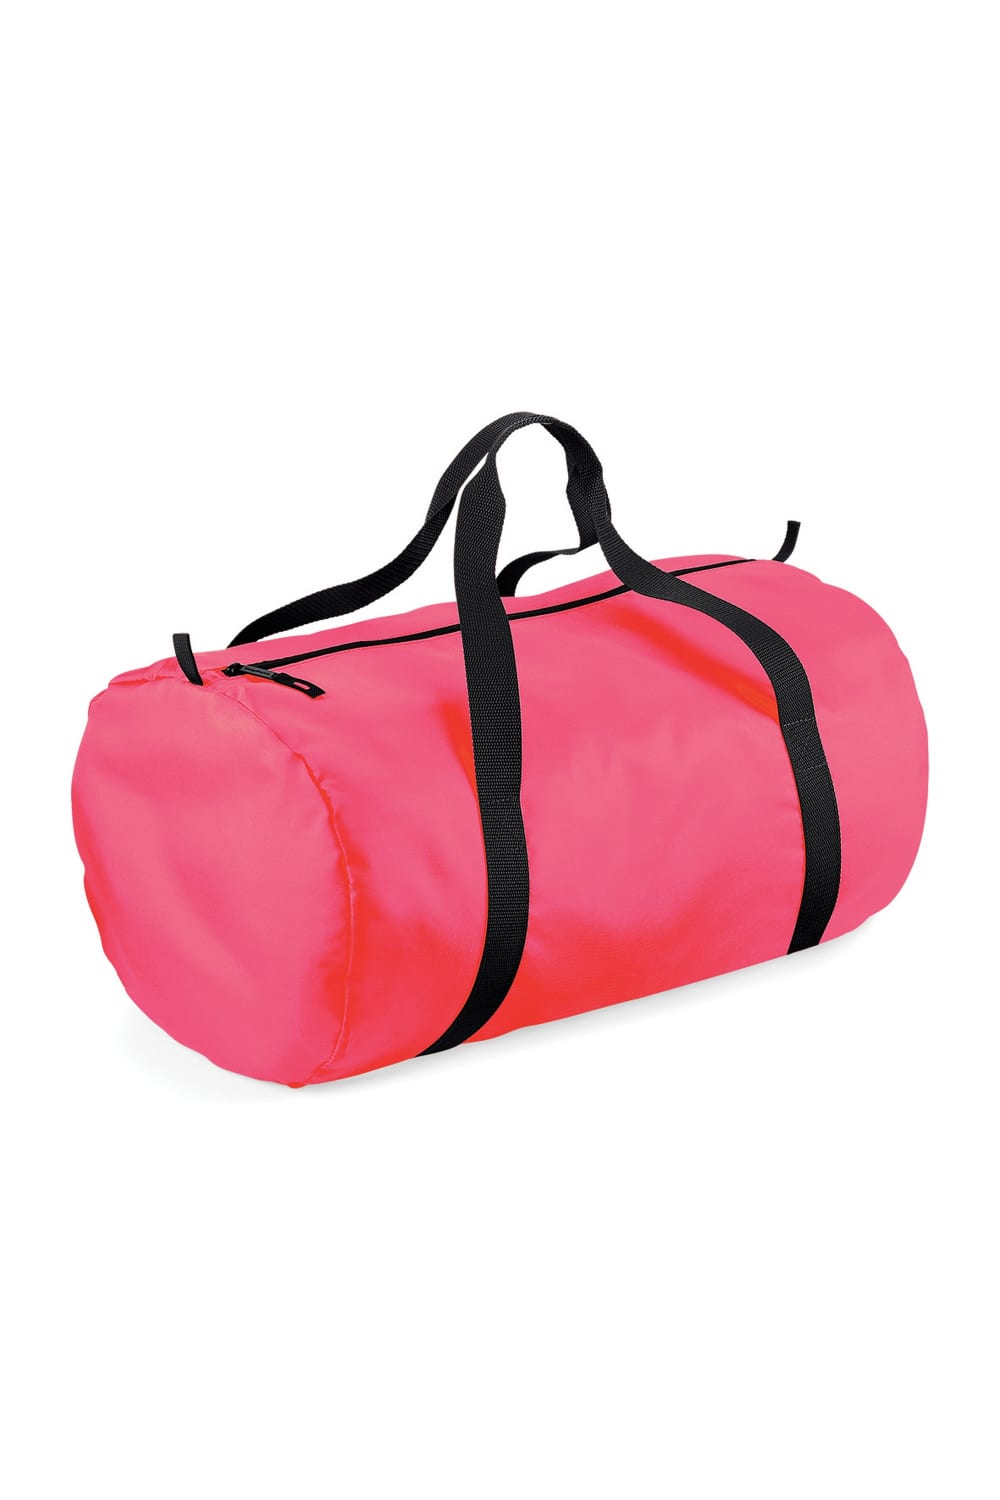 Packaway Barrel Bag/Duffel Water Resistant Travel Bag (8 Gallons) (Pack Of 2) - Fluorescent Pink/Black